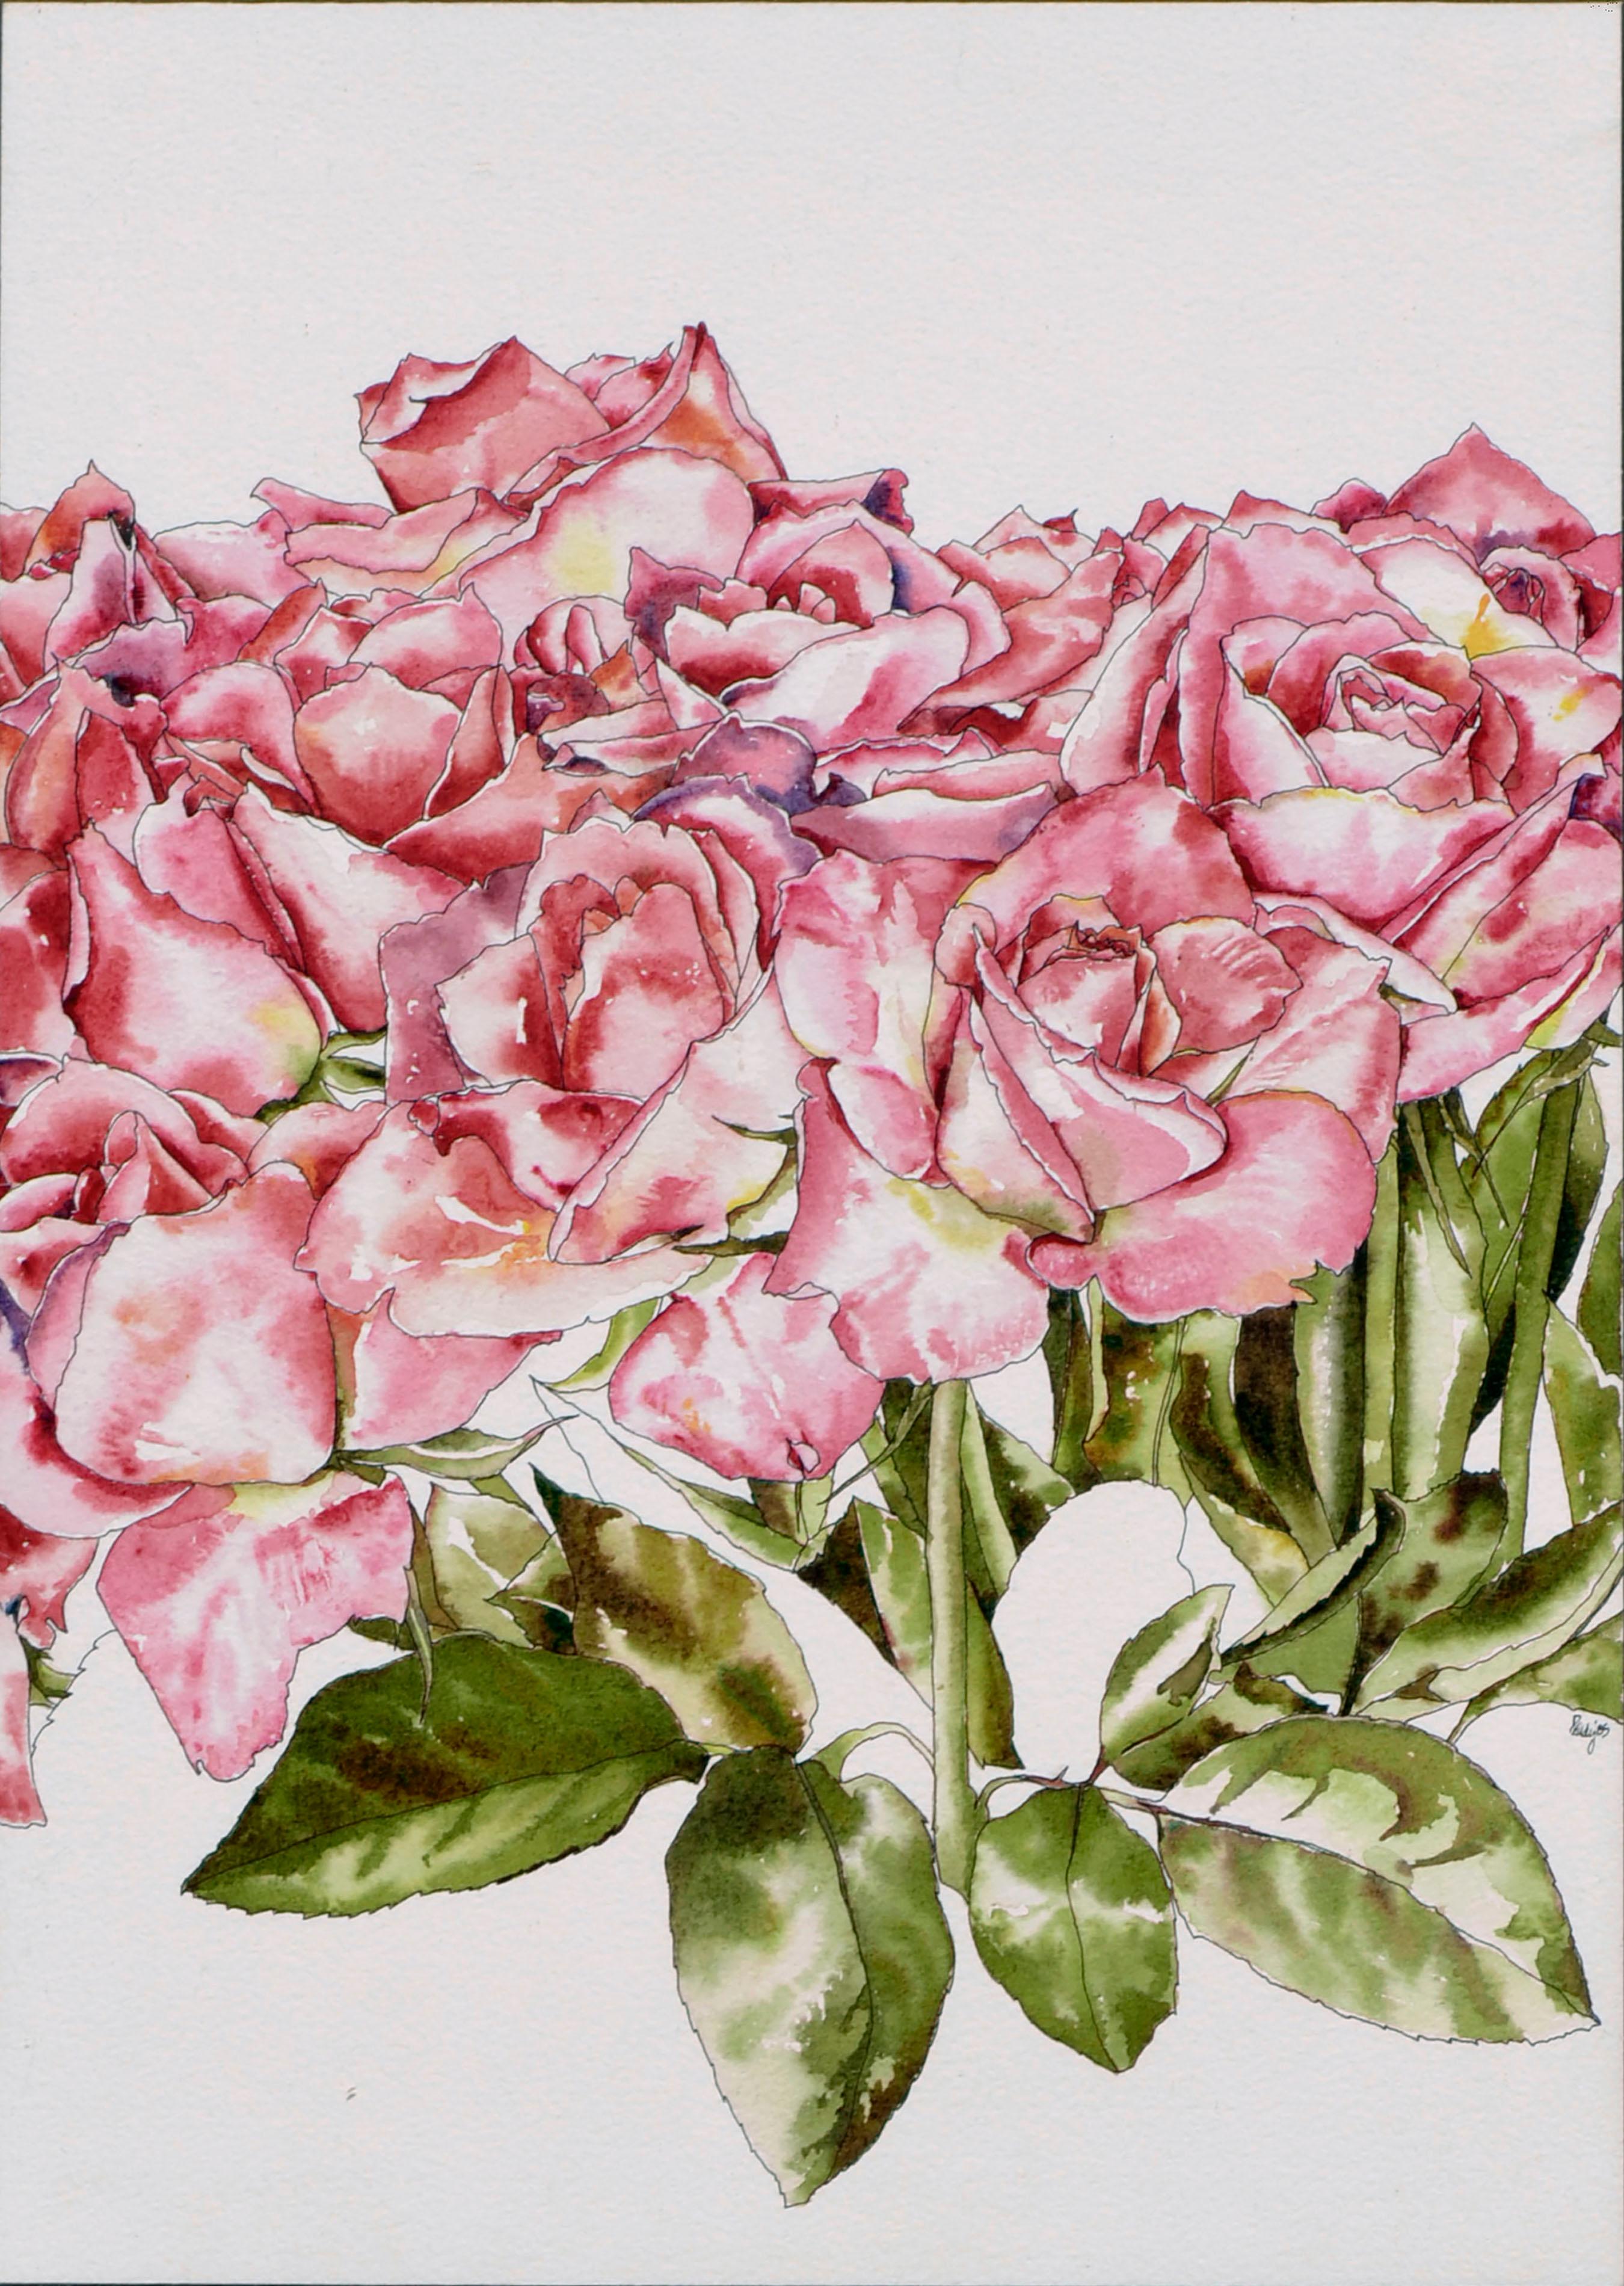 Hot Pink Roses - Botanical Study  - Art by Deborah Eddy